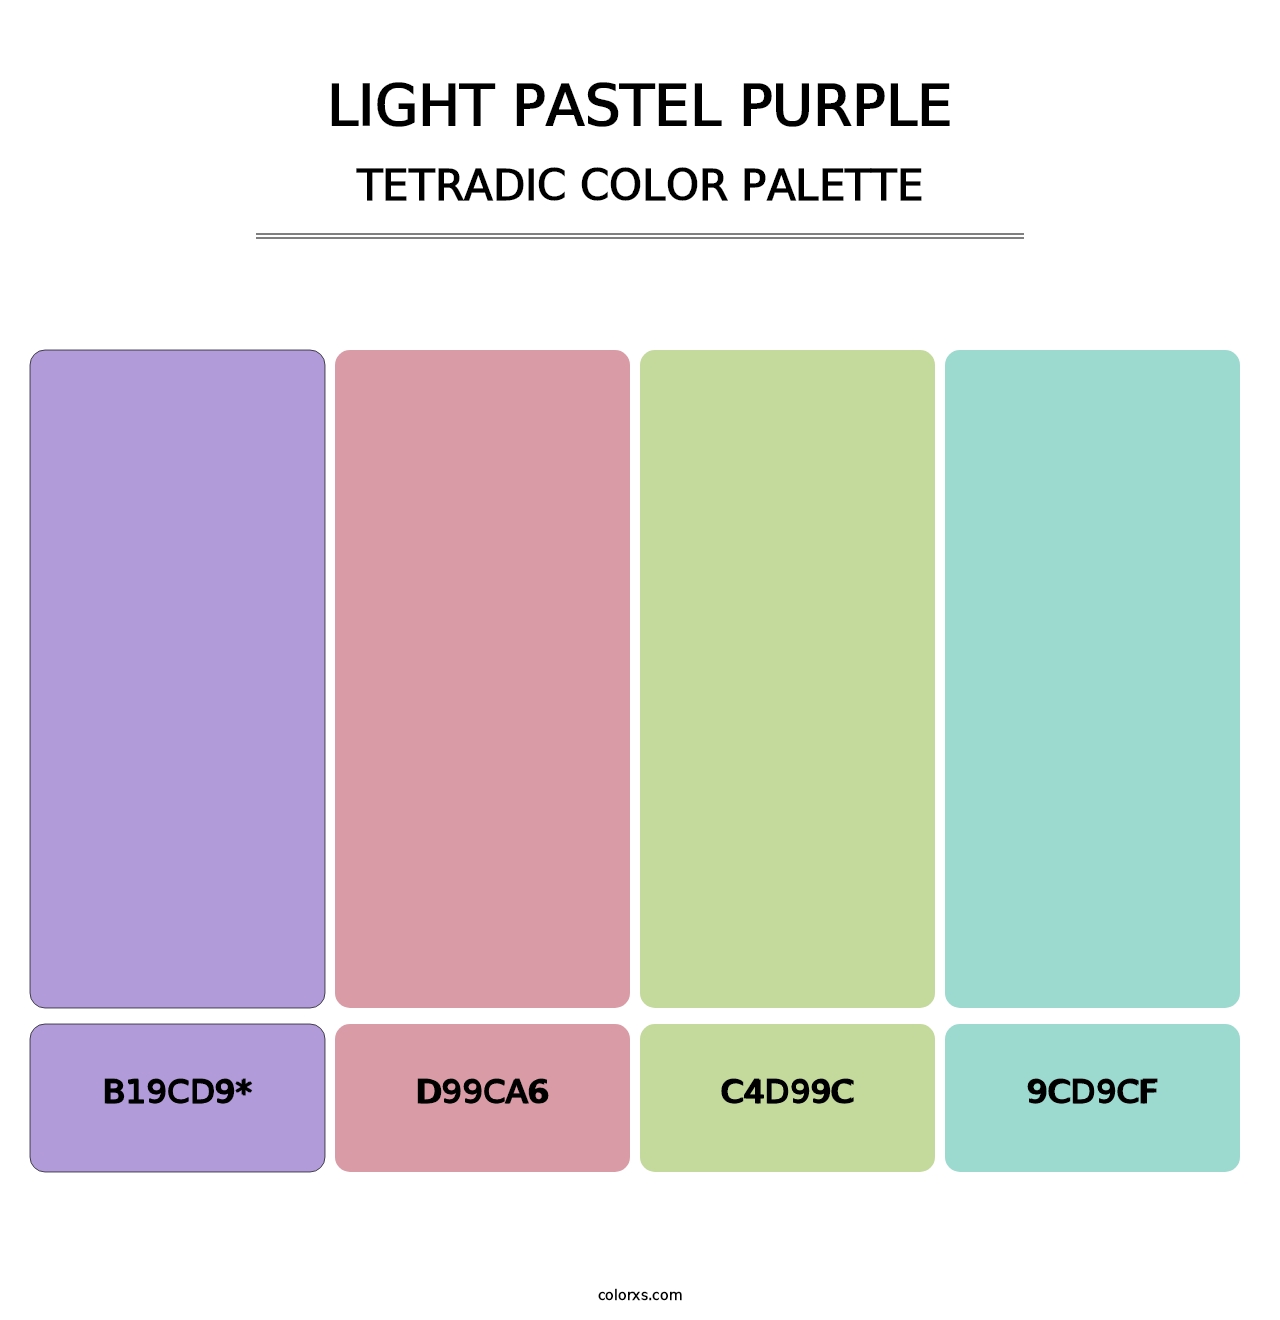 Light Pastel Purple - Tetradic Color Palette